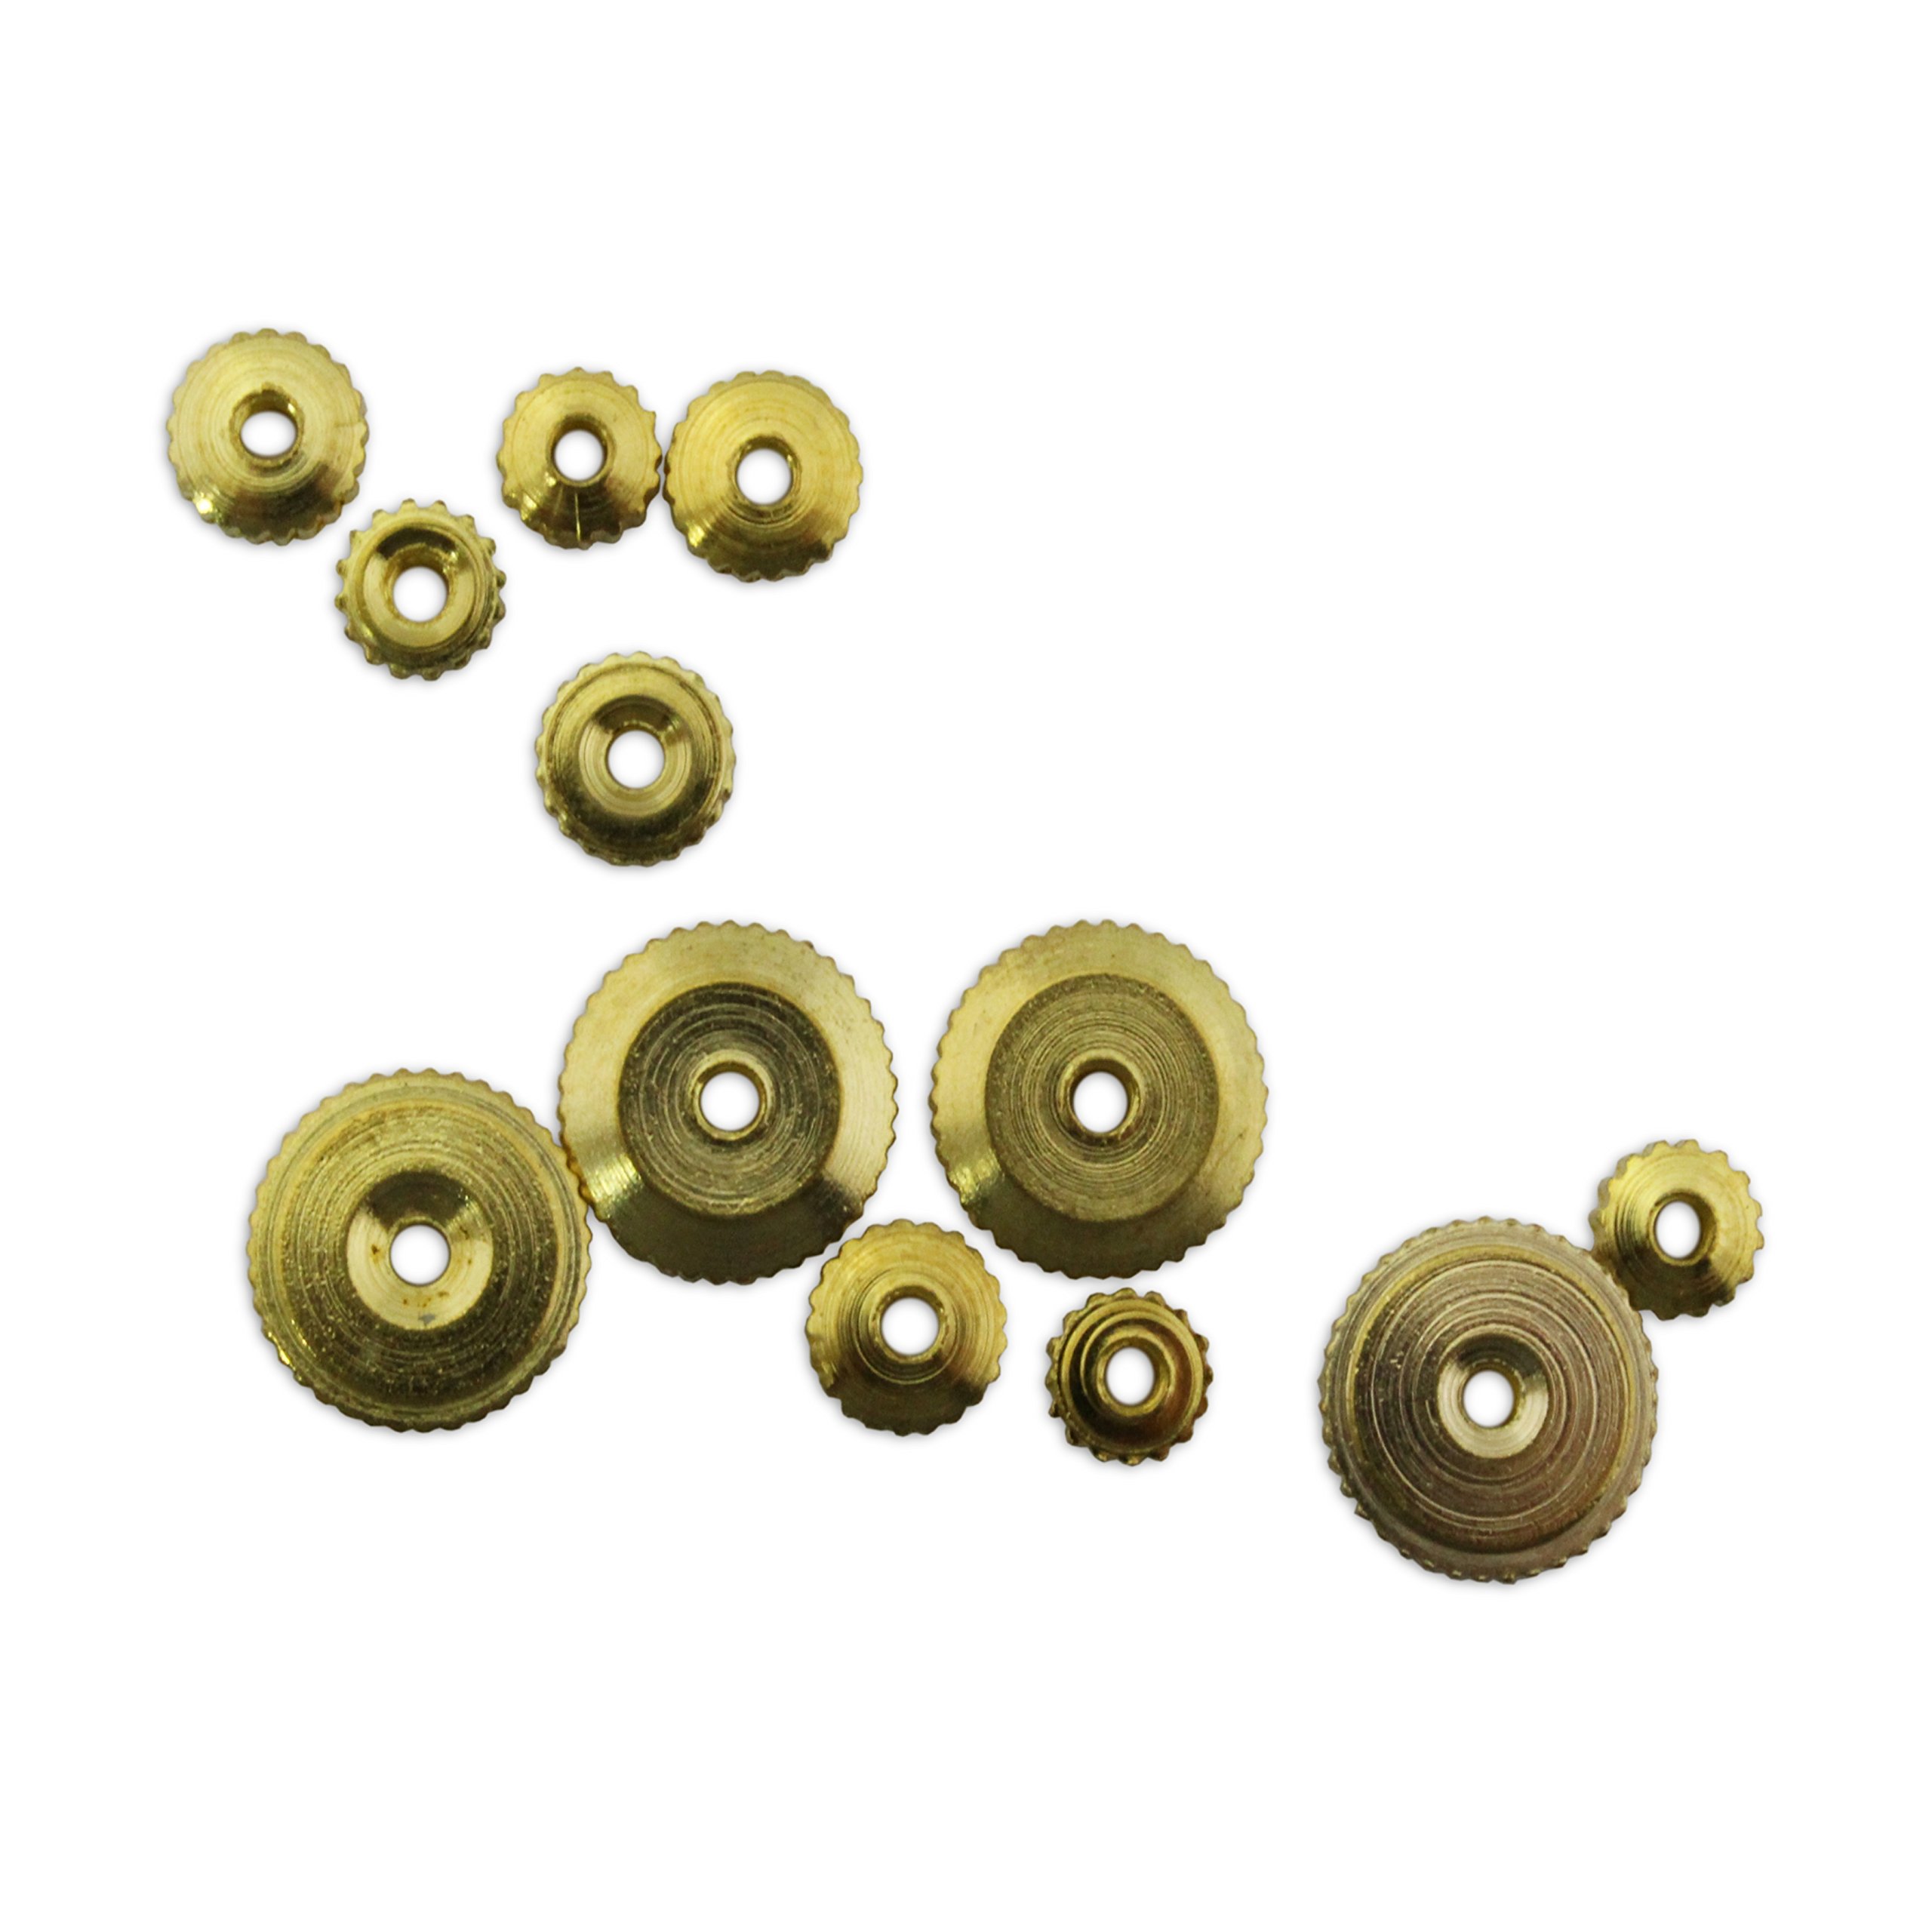 Jewellers Tools Brass Clock Hand Nuts : American Metric Clockmakers Parts Repairs Mixed Hermel (15)